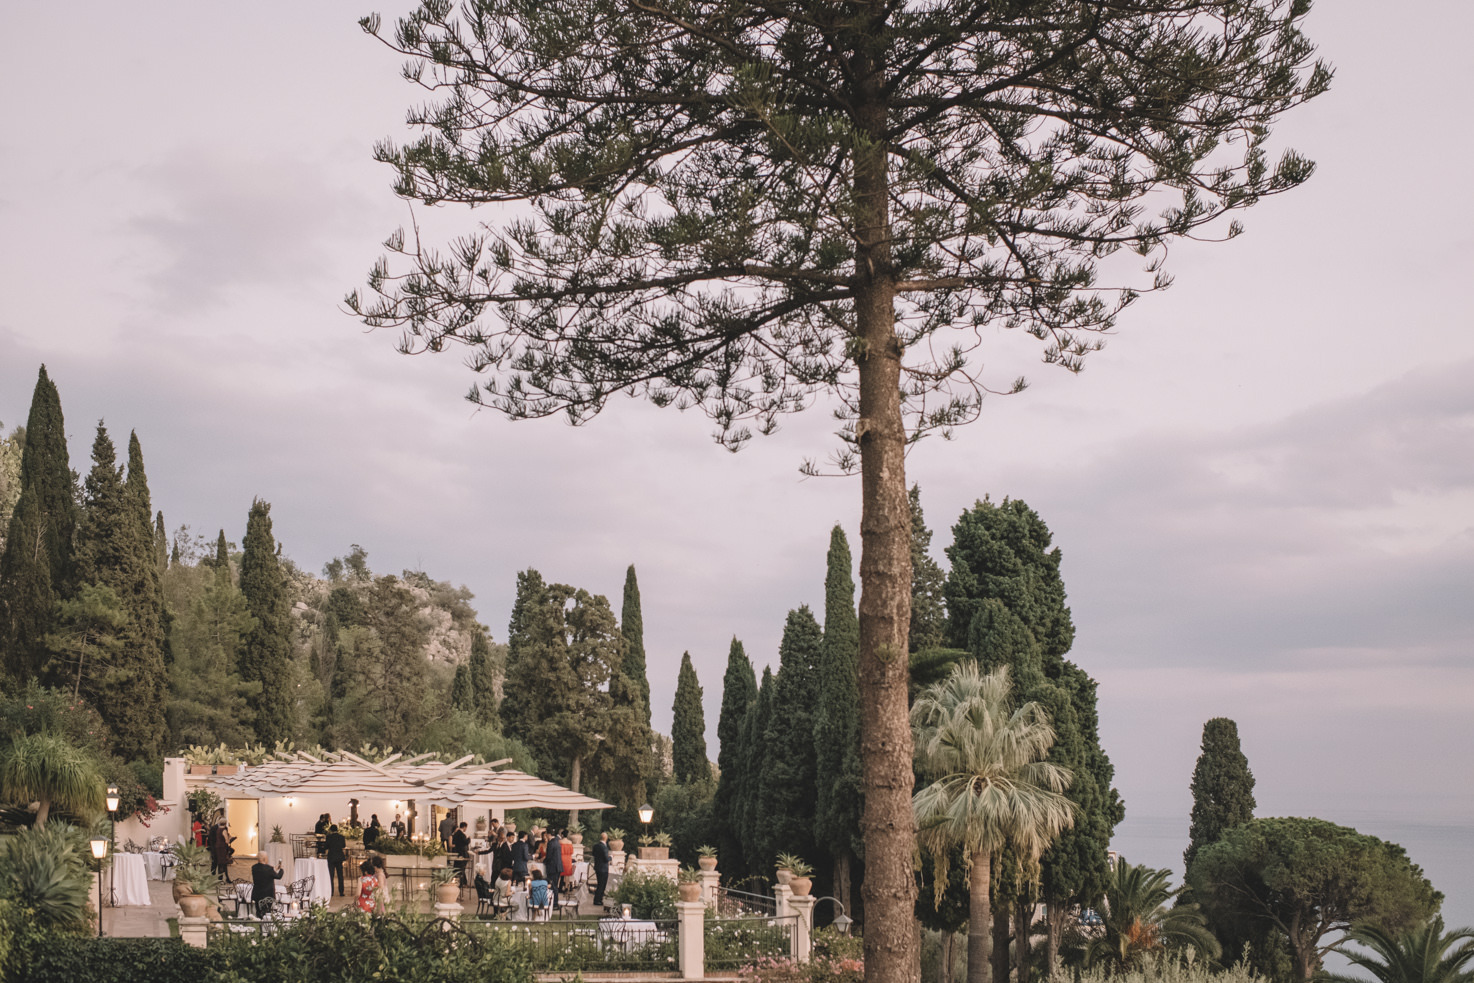 Wedding in Sicily